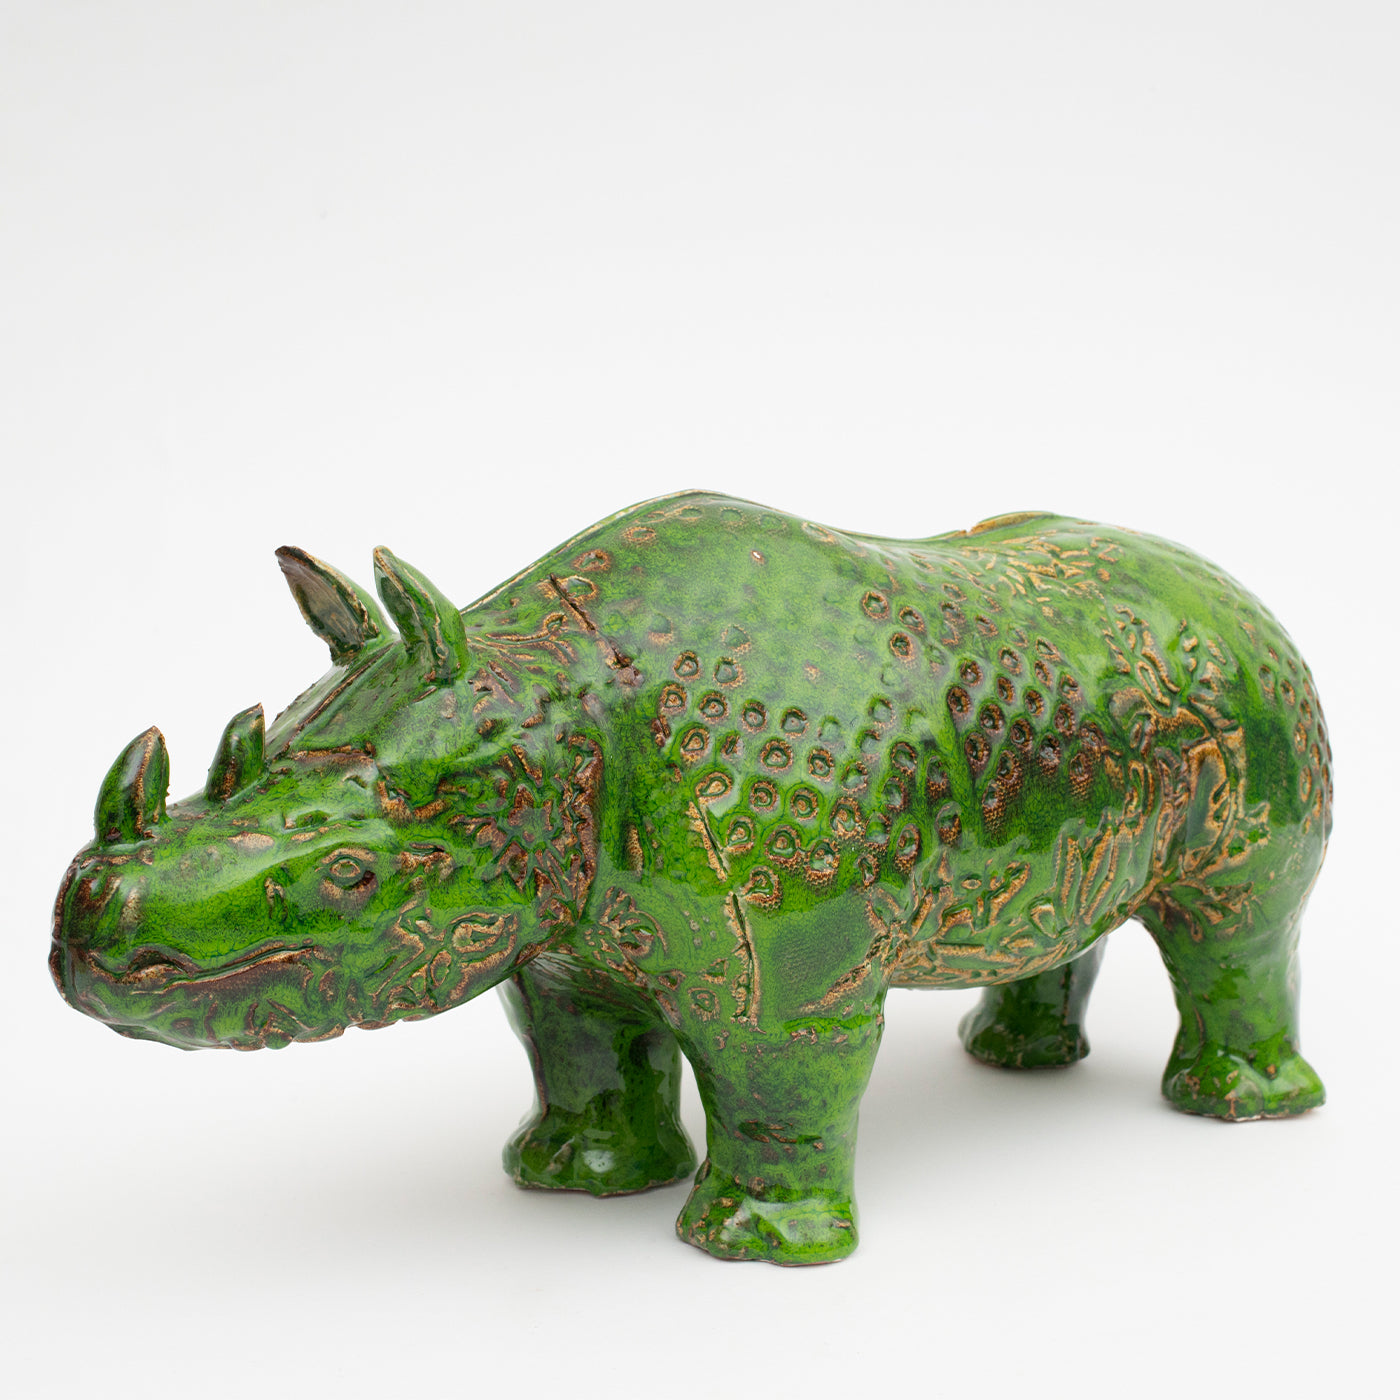 Rhino sculpture #2 - Alternative view 1